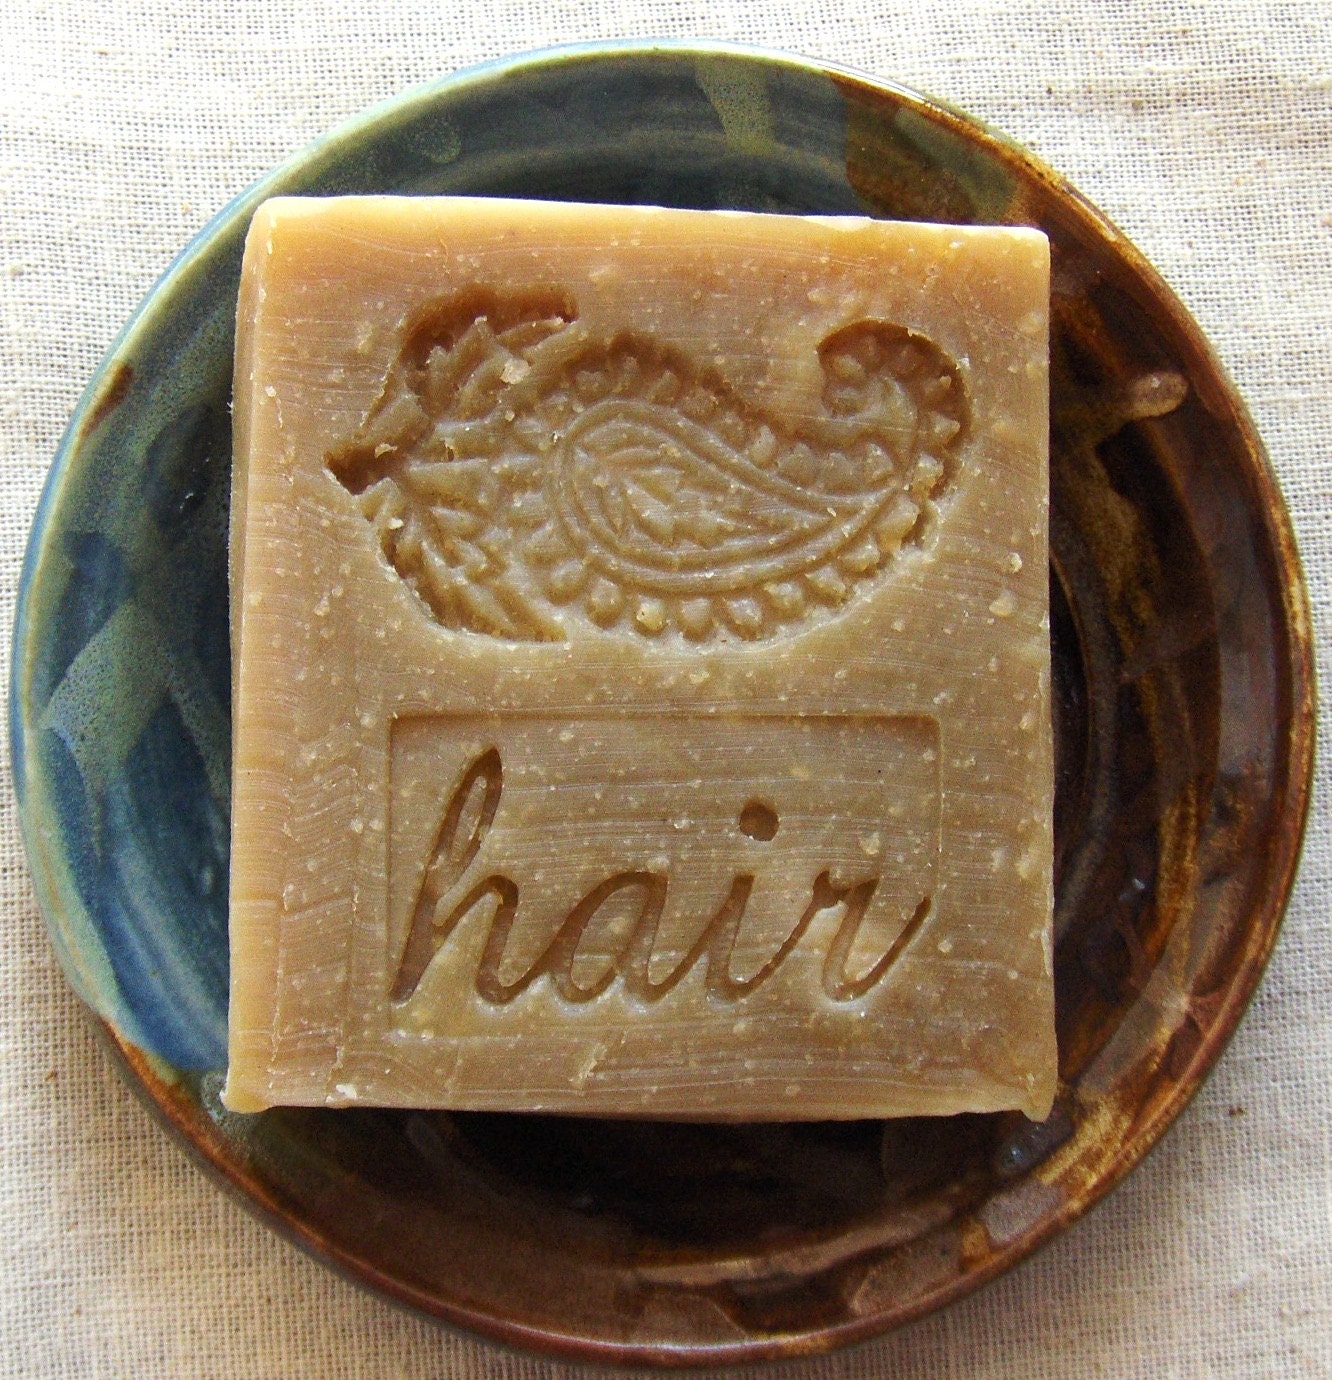 Henna Shampoo Bar with Jojoba - Unscented Shampoo Bar - Vegan Shampoo Bar - SLS free - No animal testing - AquarianBath